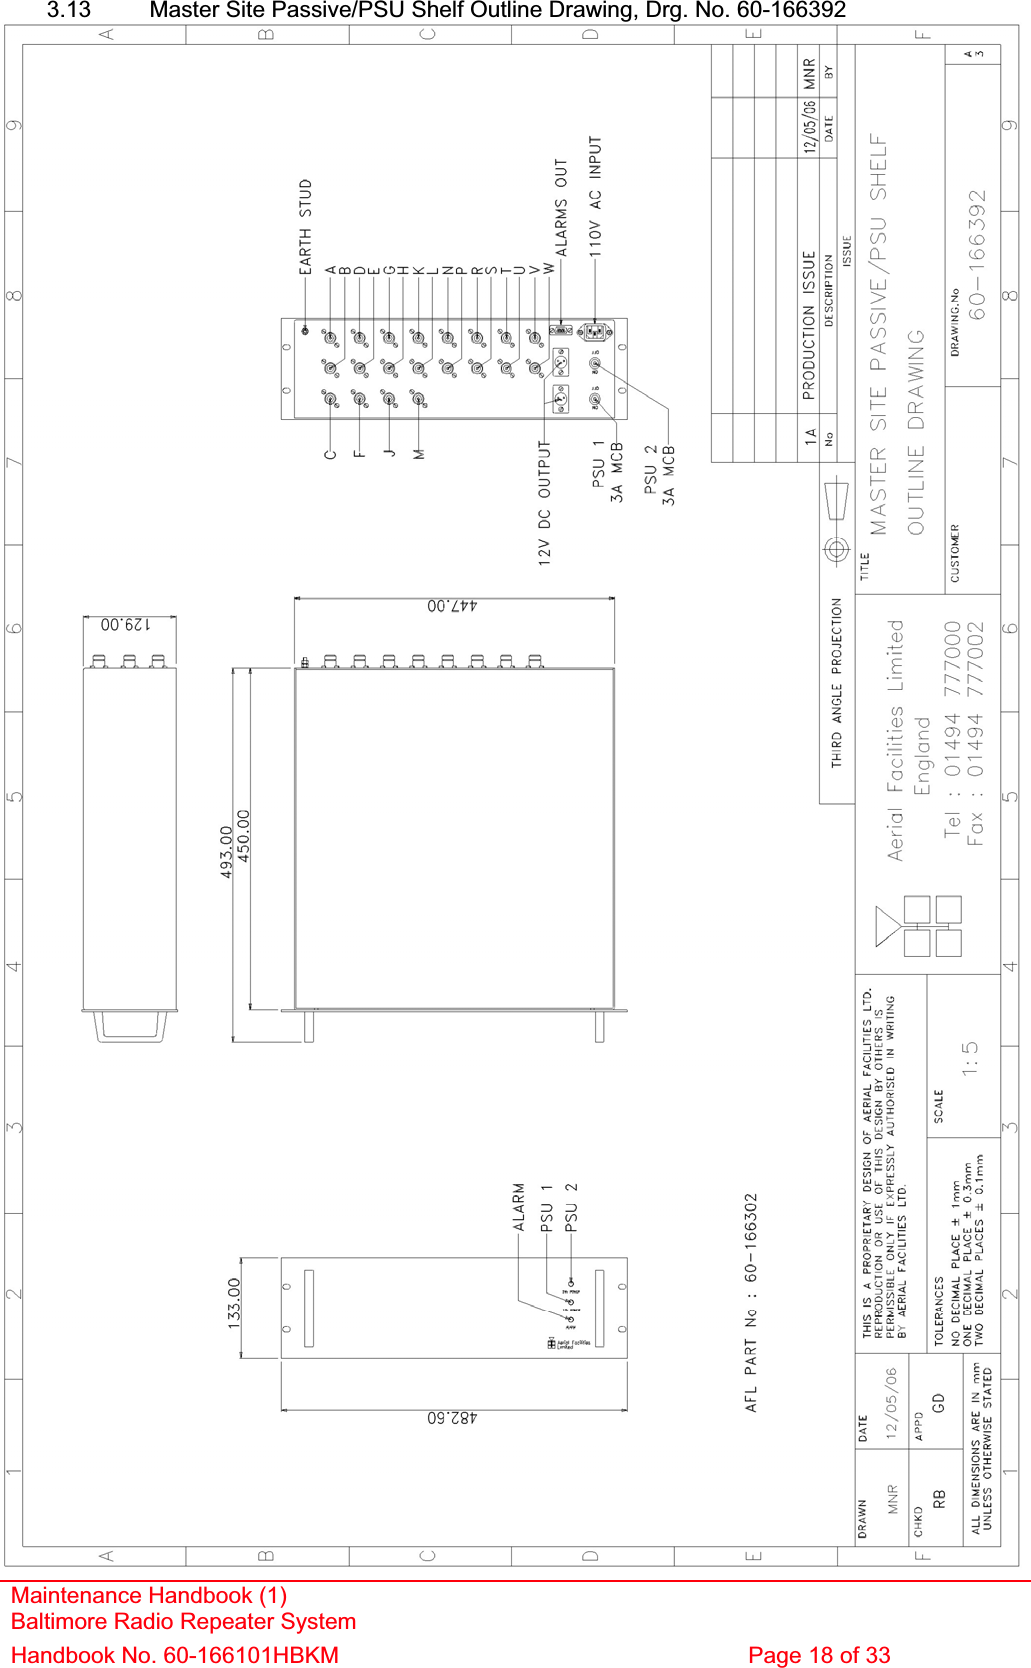 3.13  Master Site Passive/PSU Shelf Outline Drawing, Drg. No. 60-166392 Maintenance Handbook (1) Baltimore Radio Repeater System Handbook No. 60-166101HBKM  Page 18 of 33 